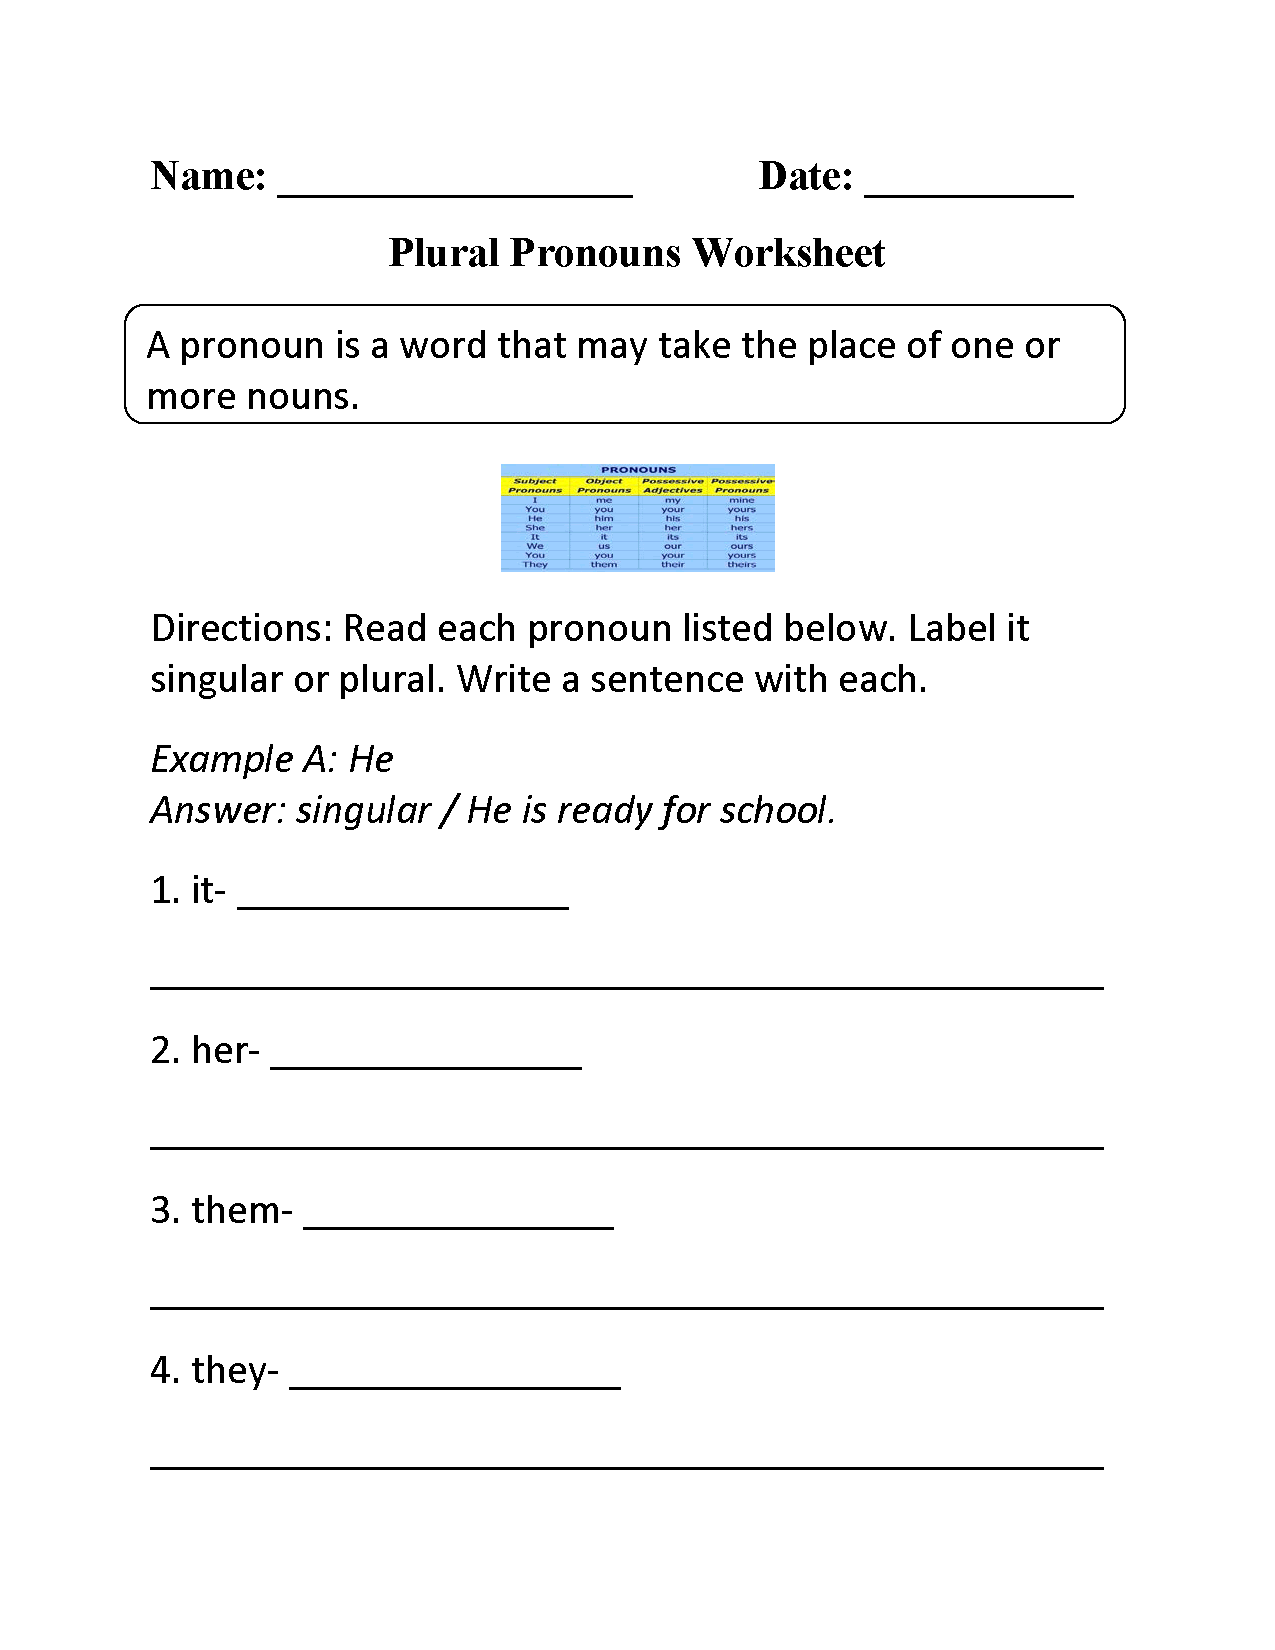 noun-pronoun-agreement-worksheets